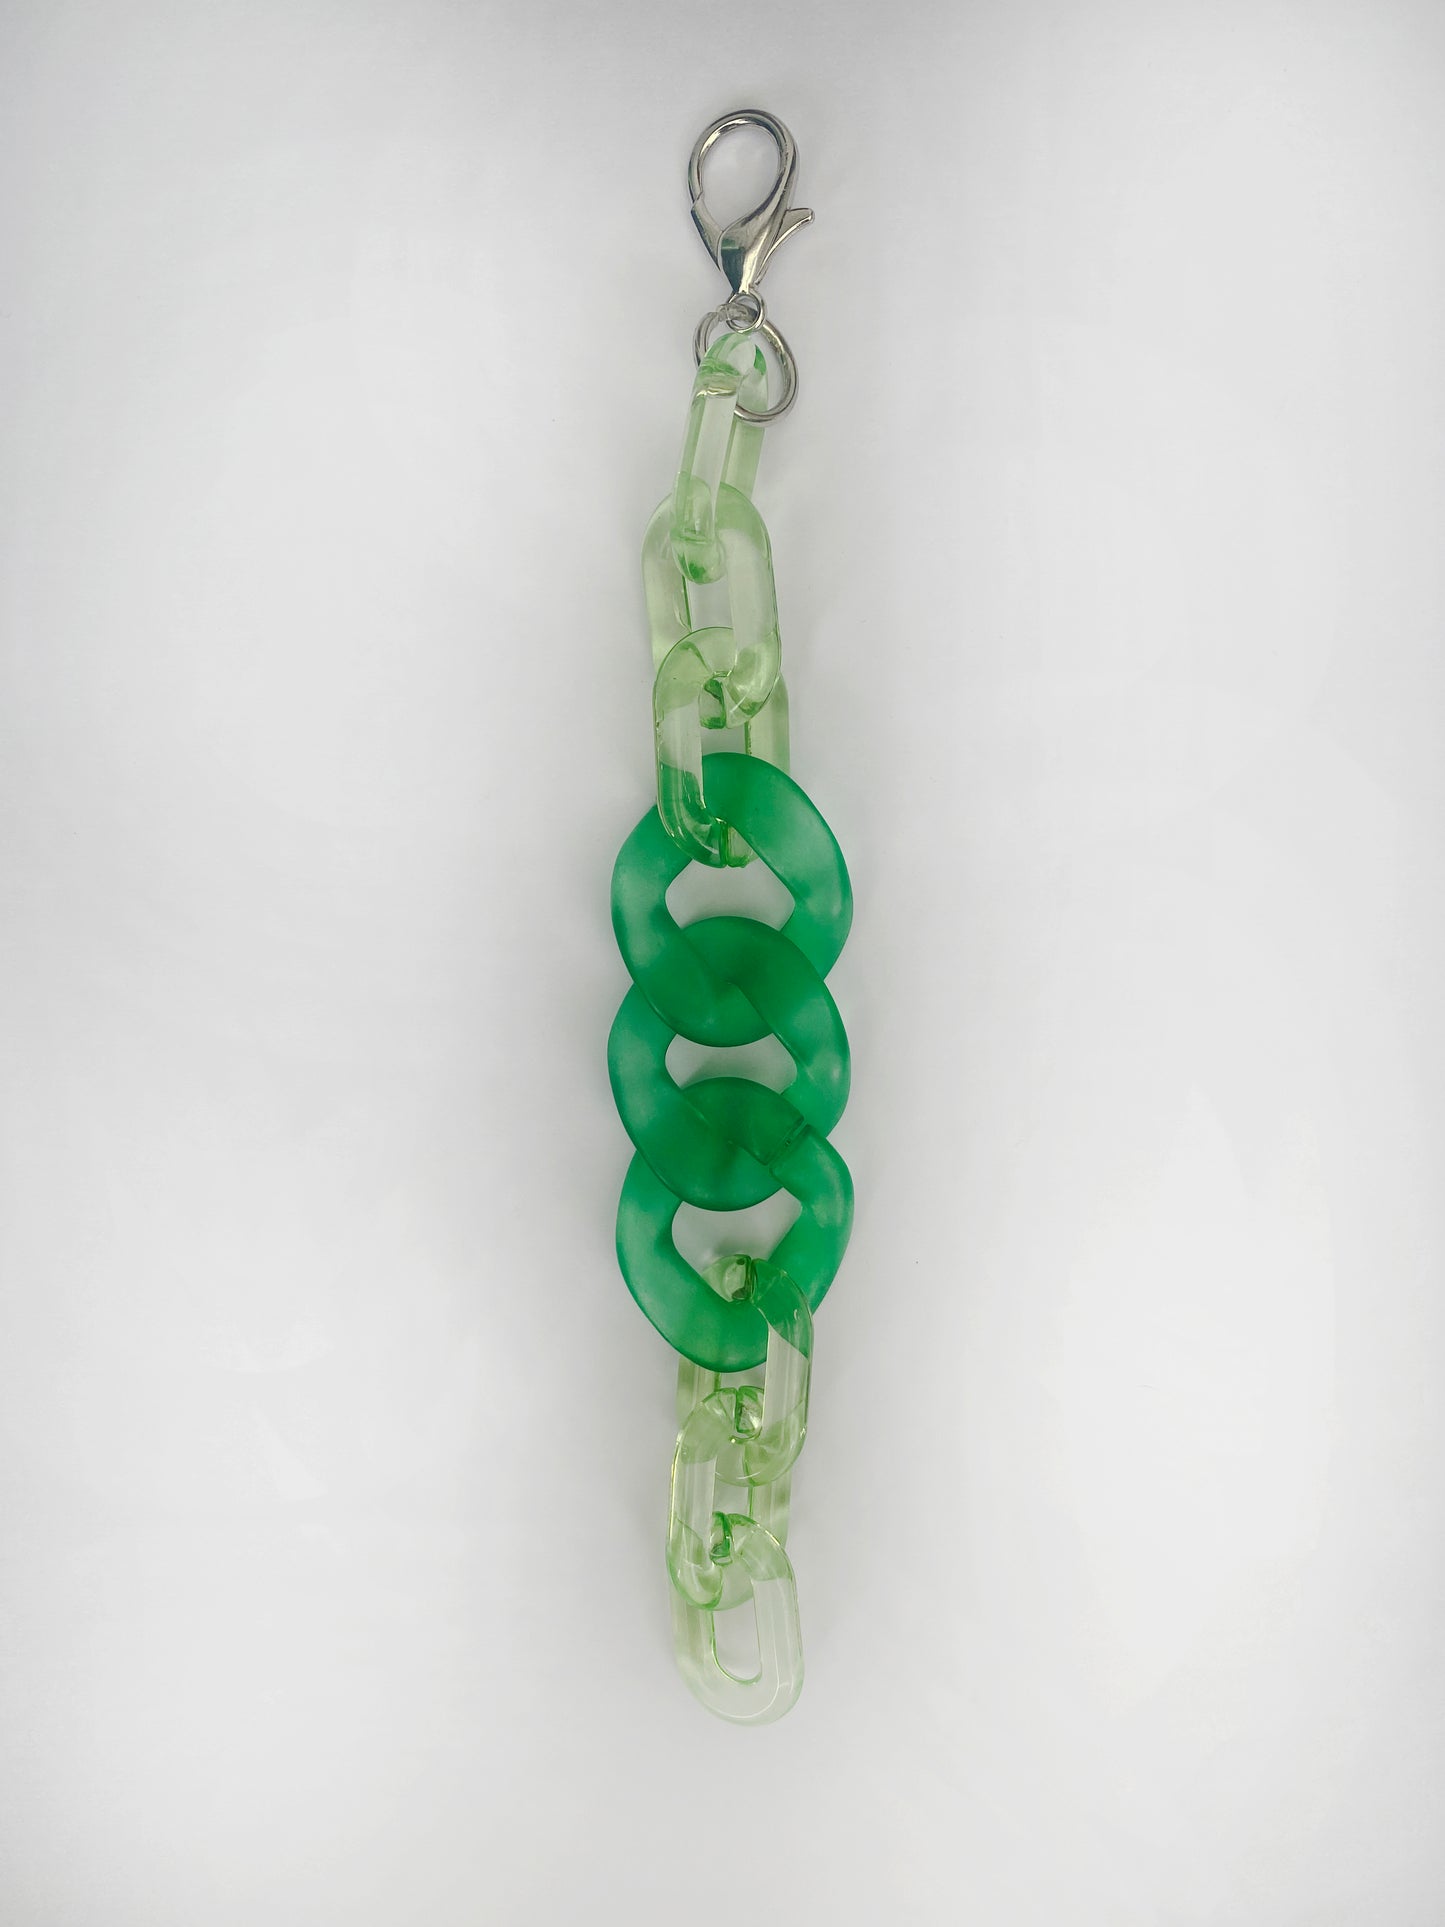 INFINITE COLORS Bracelet - Green | cukimber designs